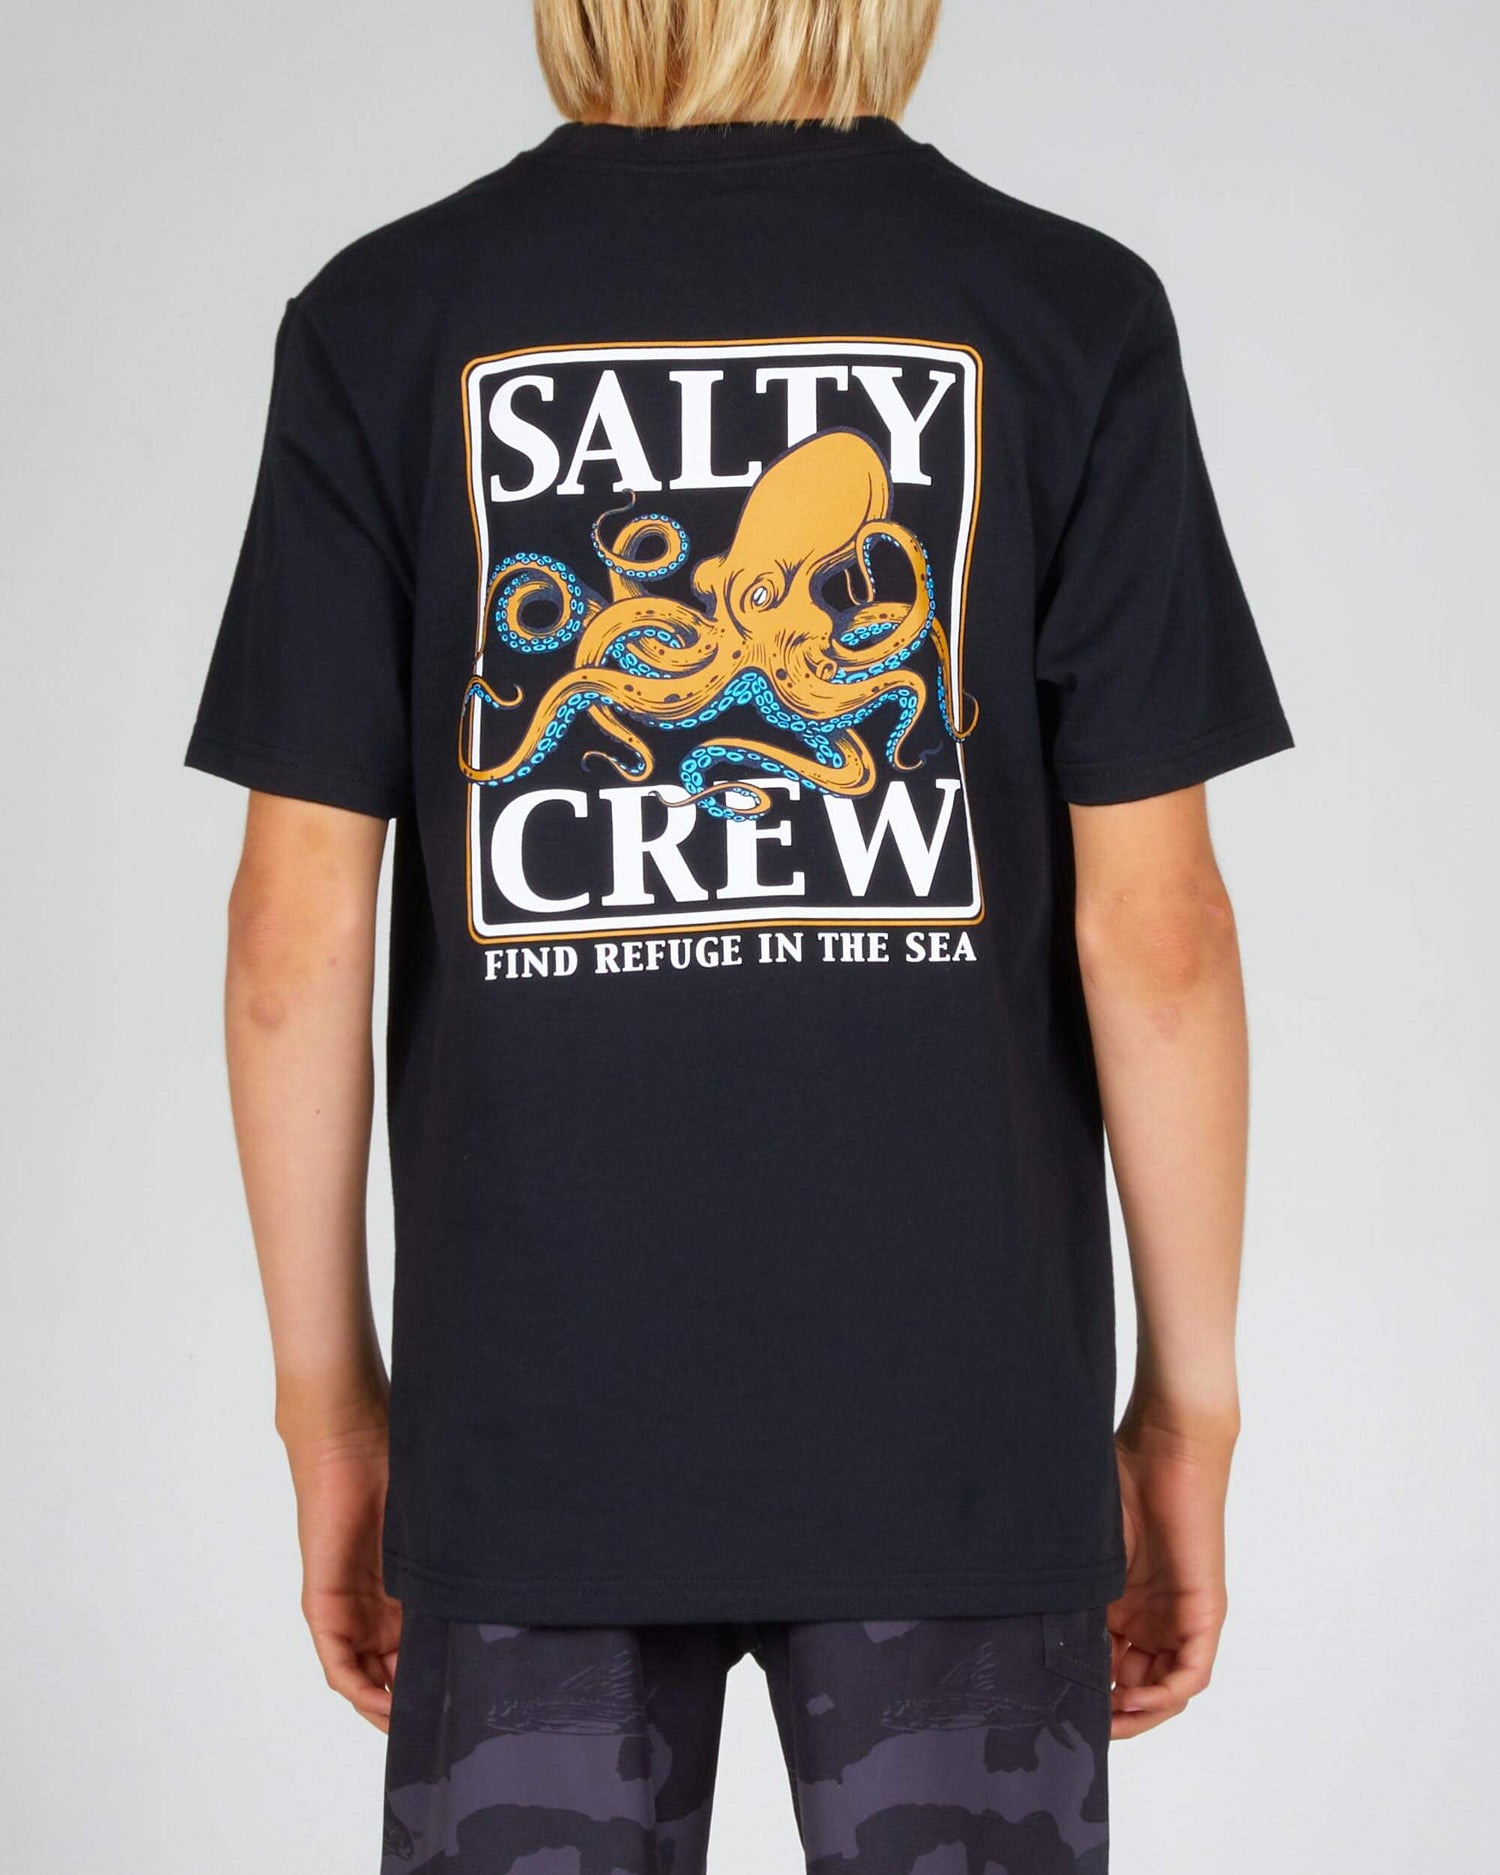 Salty Crew Boys - Lanzatintas Boys S/S Tee - Black